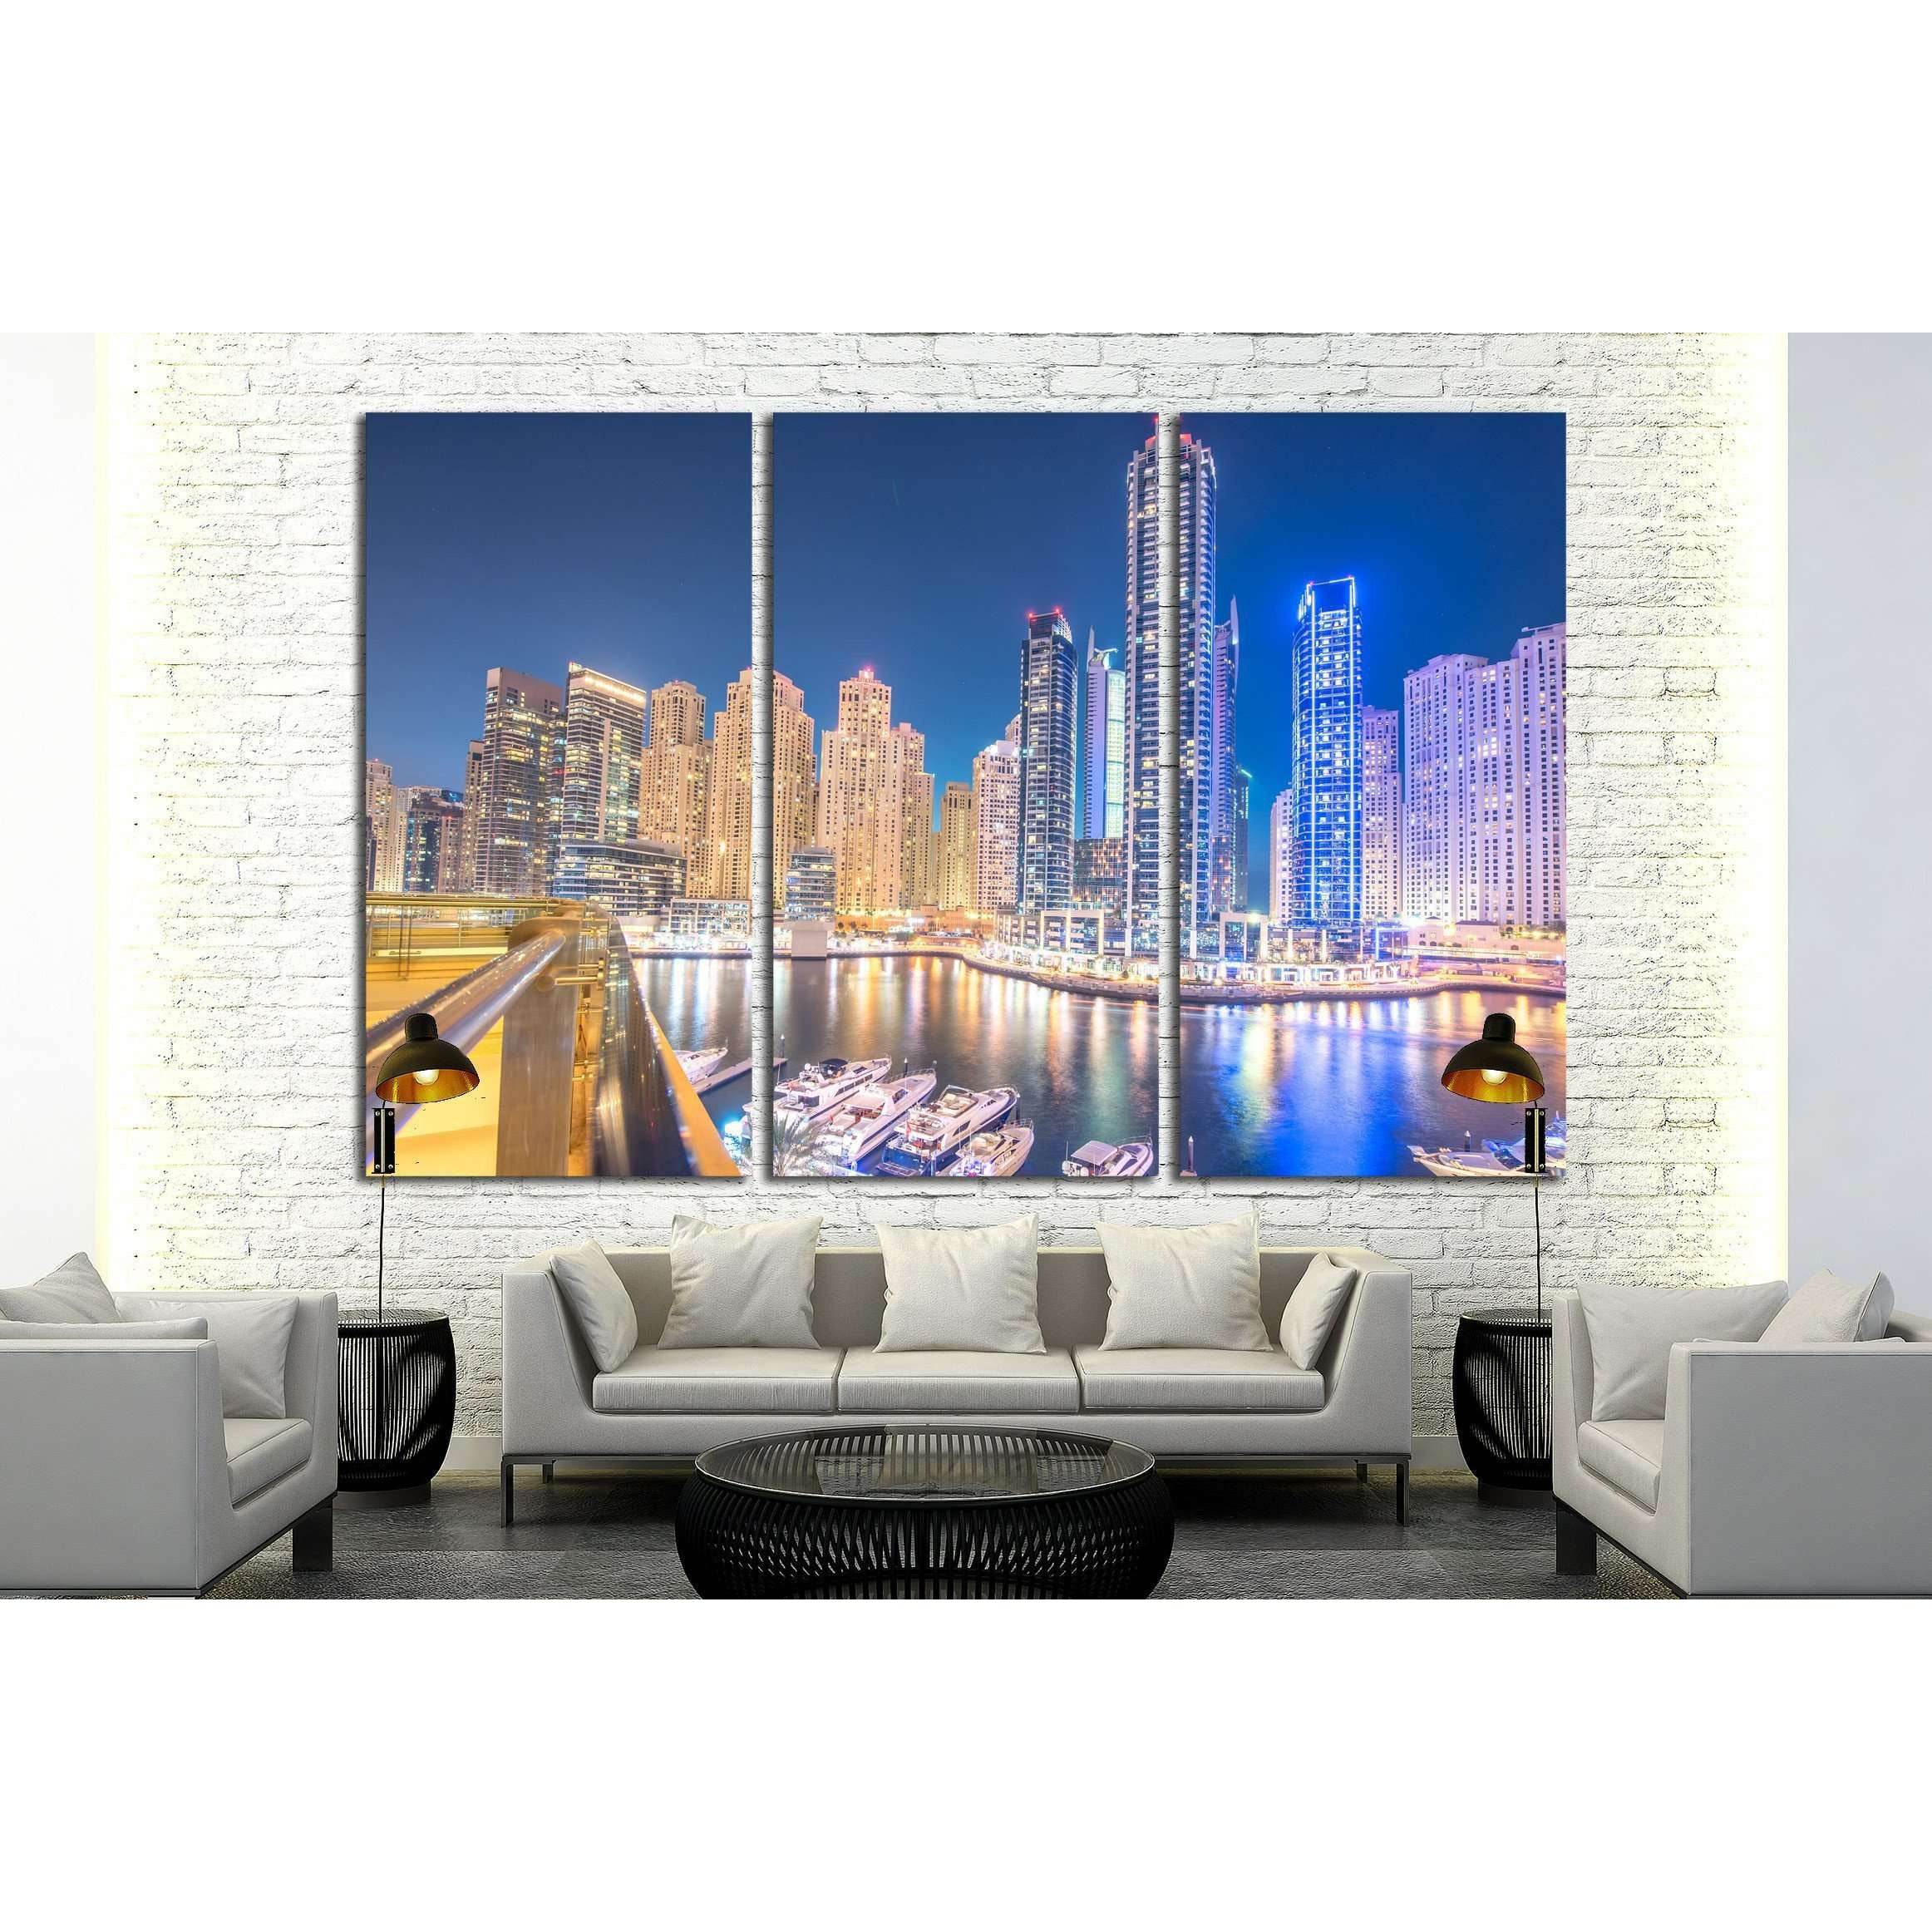 Dubai. Marina district is popular residential area in Dubai №2194 Ready to Hang Canvas Print